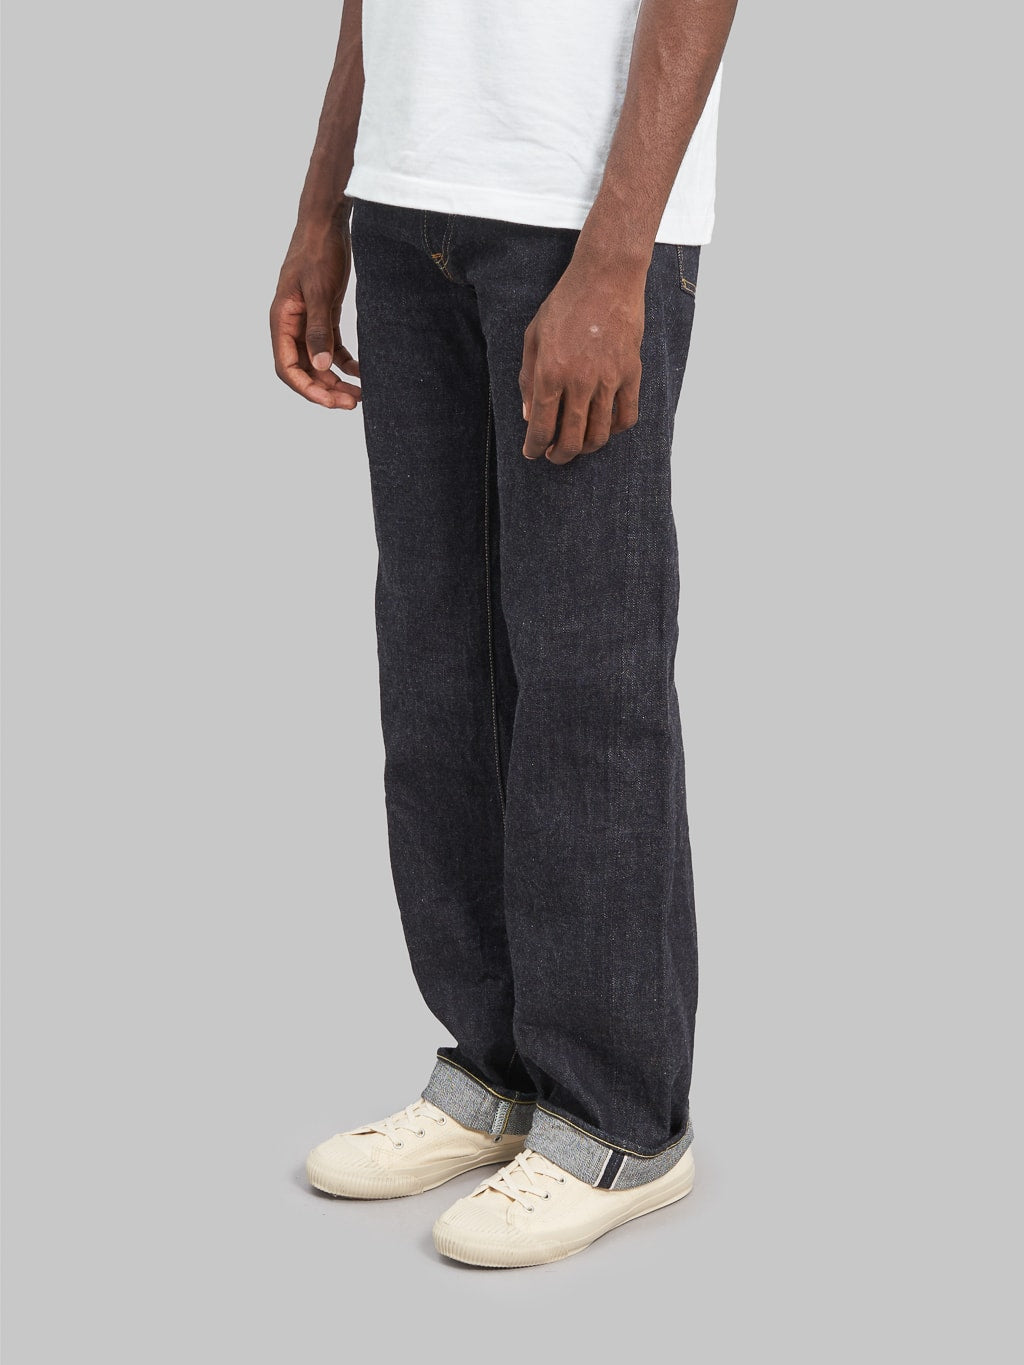 ONI Denim 200 Low Tension 15oz Wide Straight Jeans side look